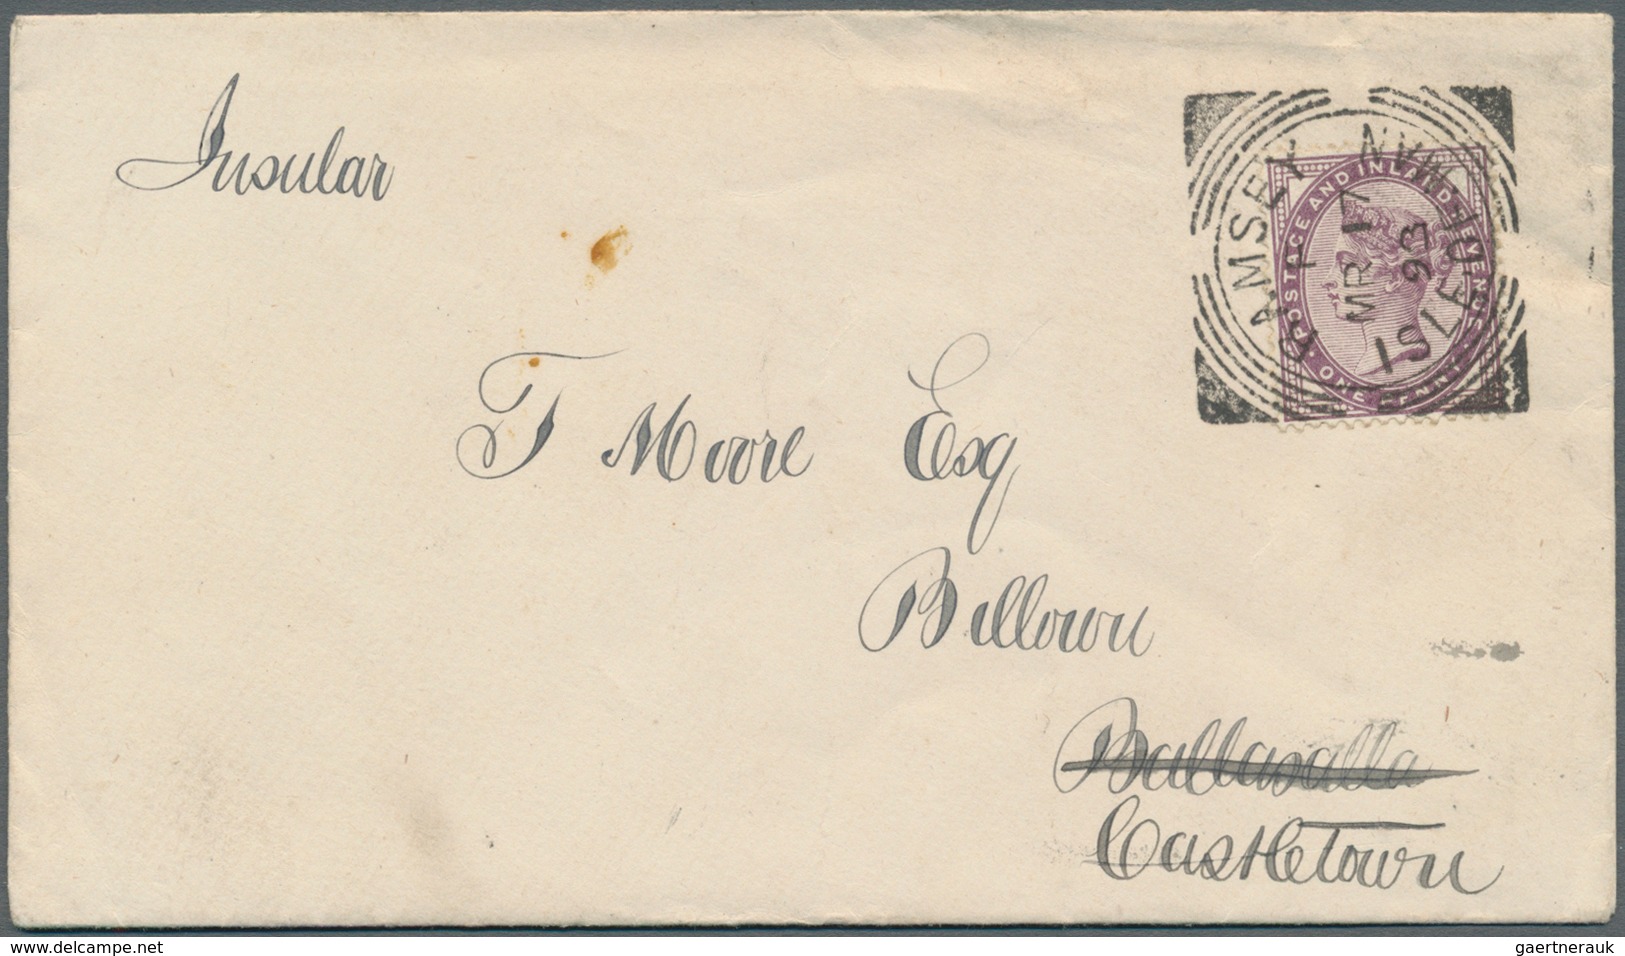 26762 Großbritannien - Isle of Man: 1852/1937: Very fine lot of 39 village postmarks on envelopes, picture